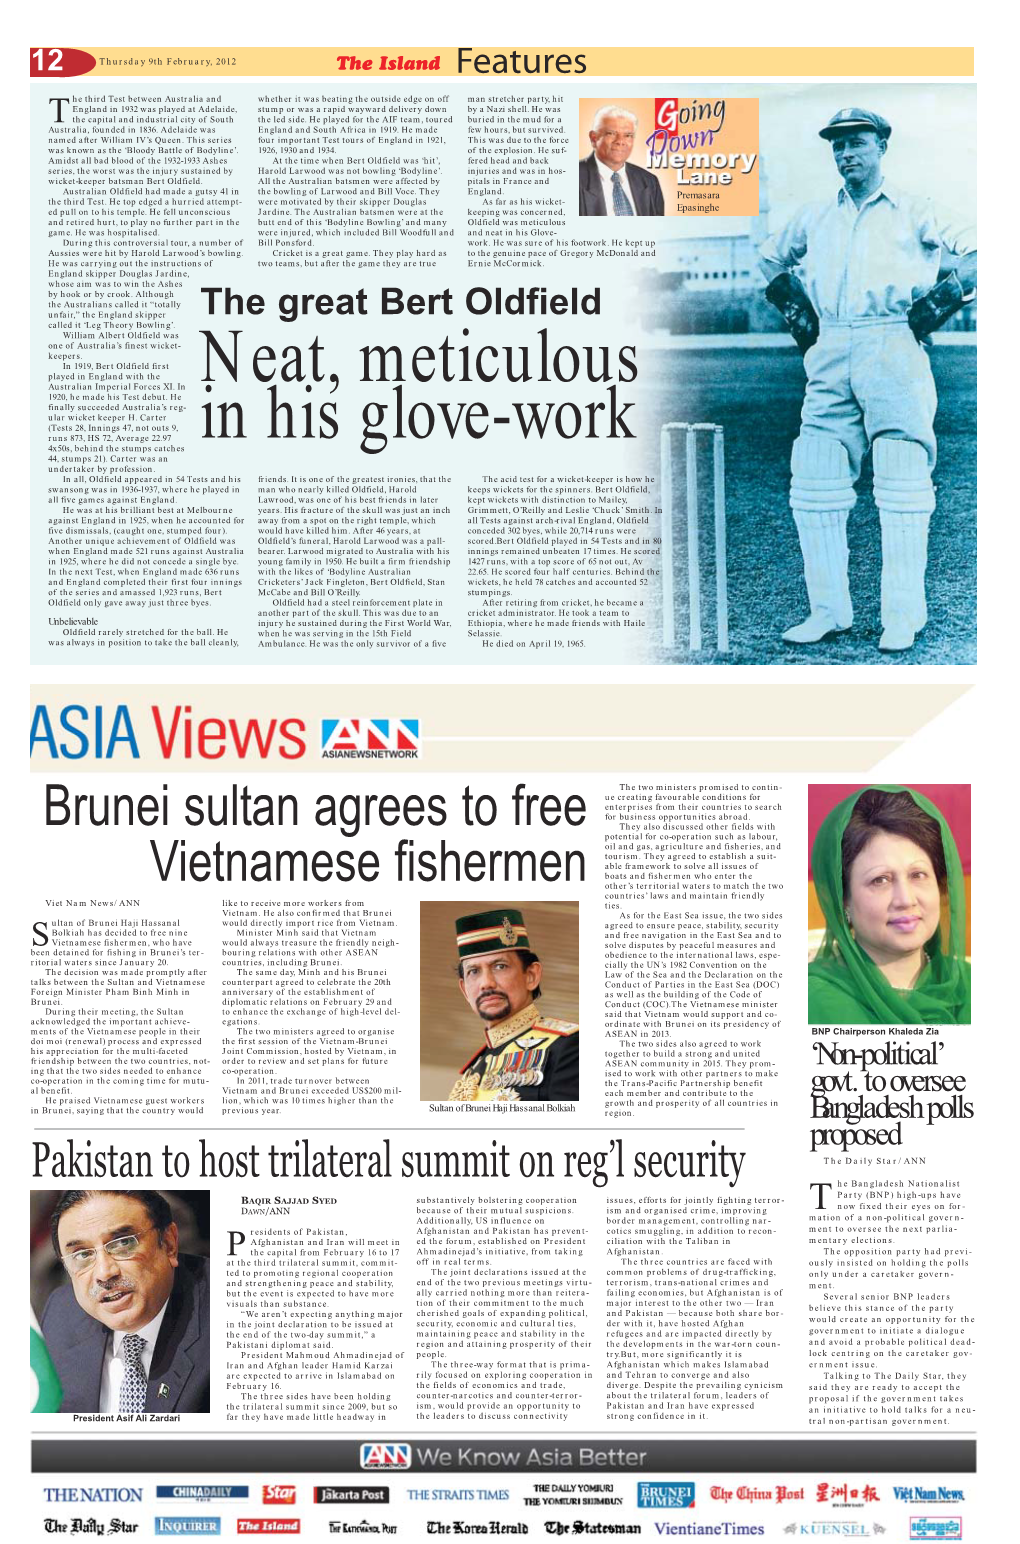 Brunei Sultan Agrees to Free Vietnamese Fishermen